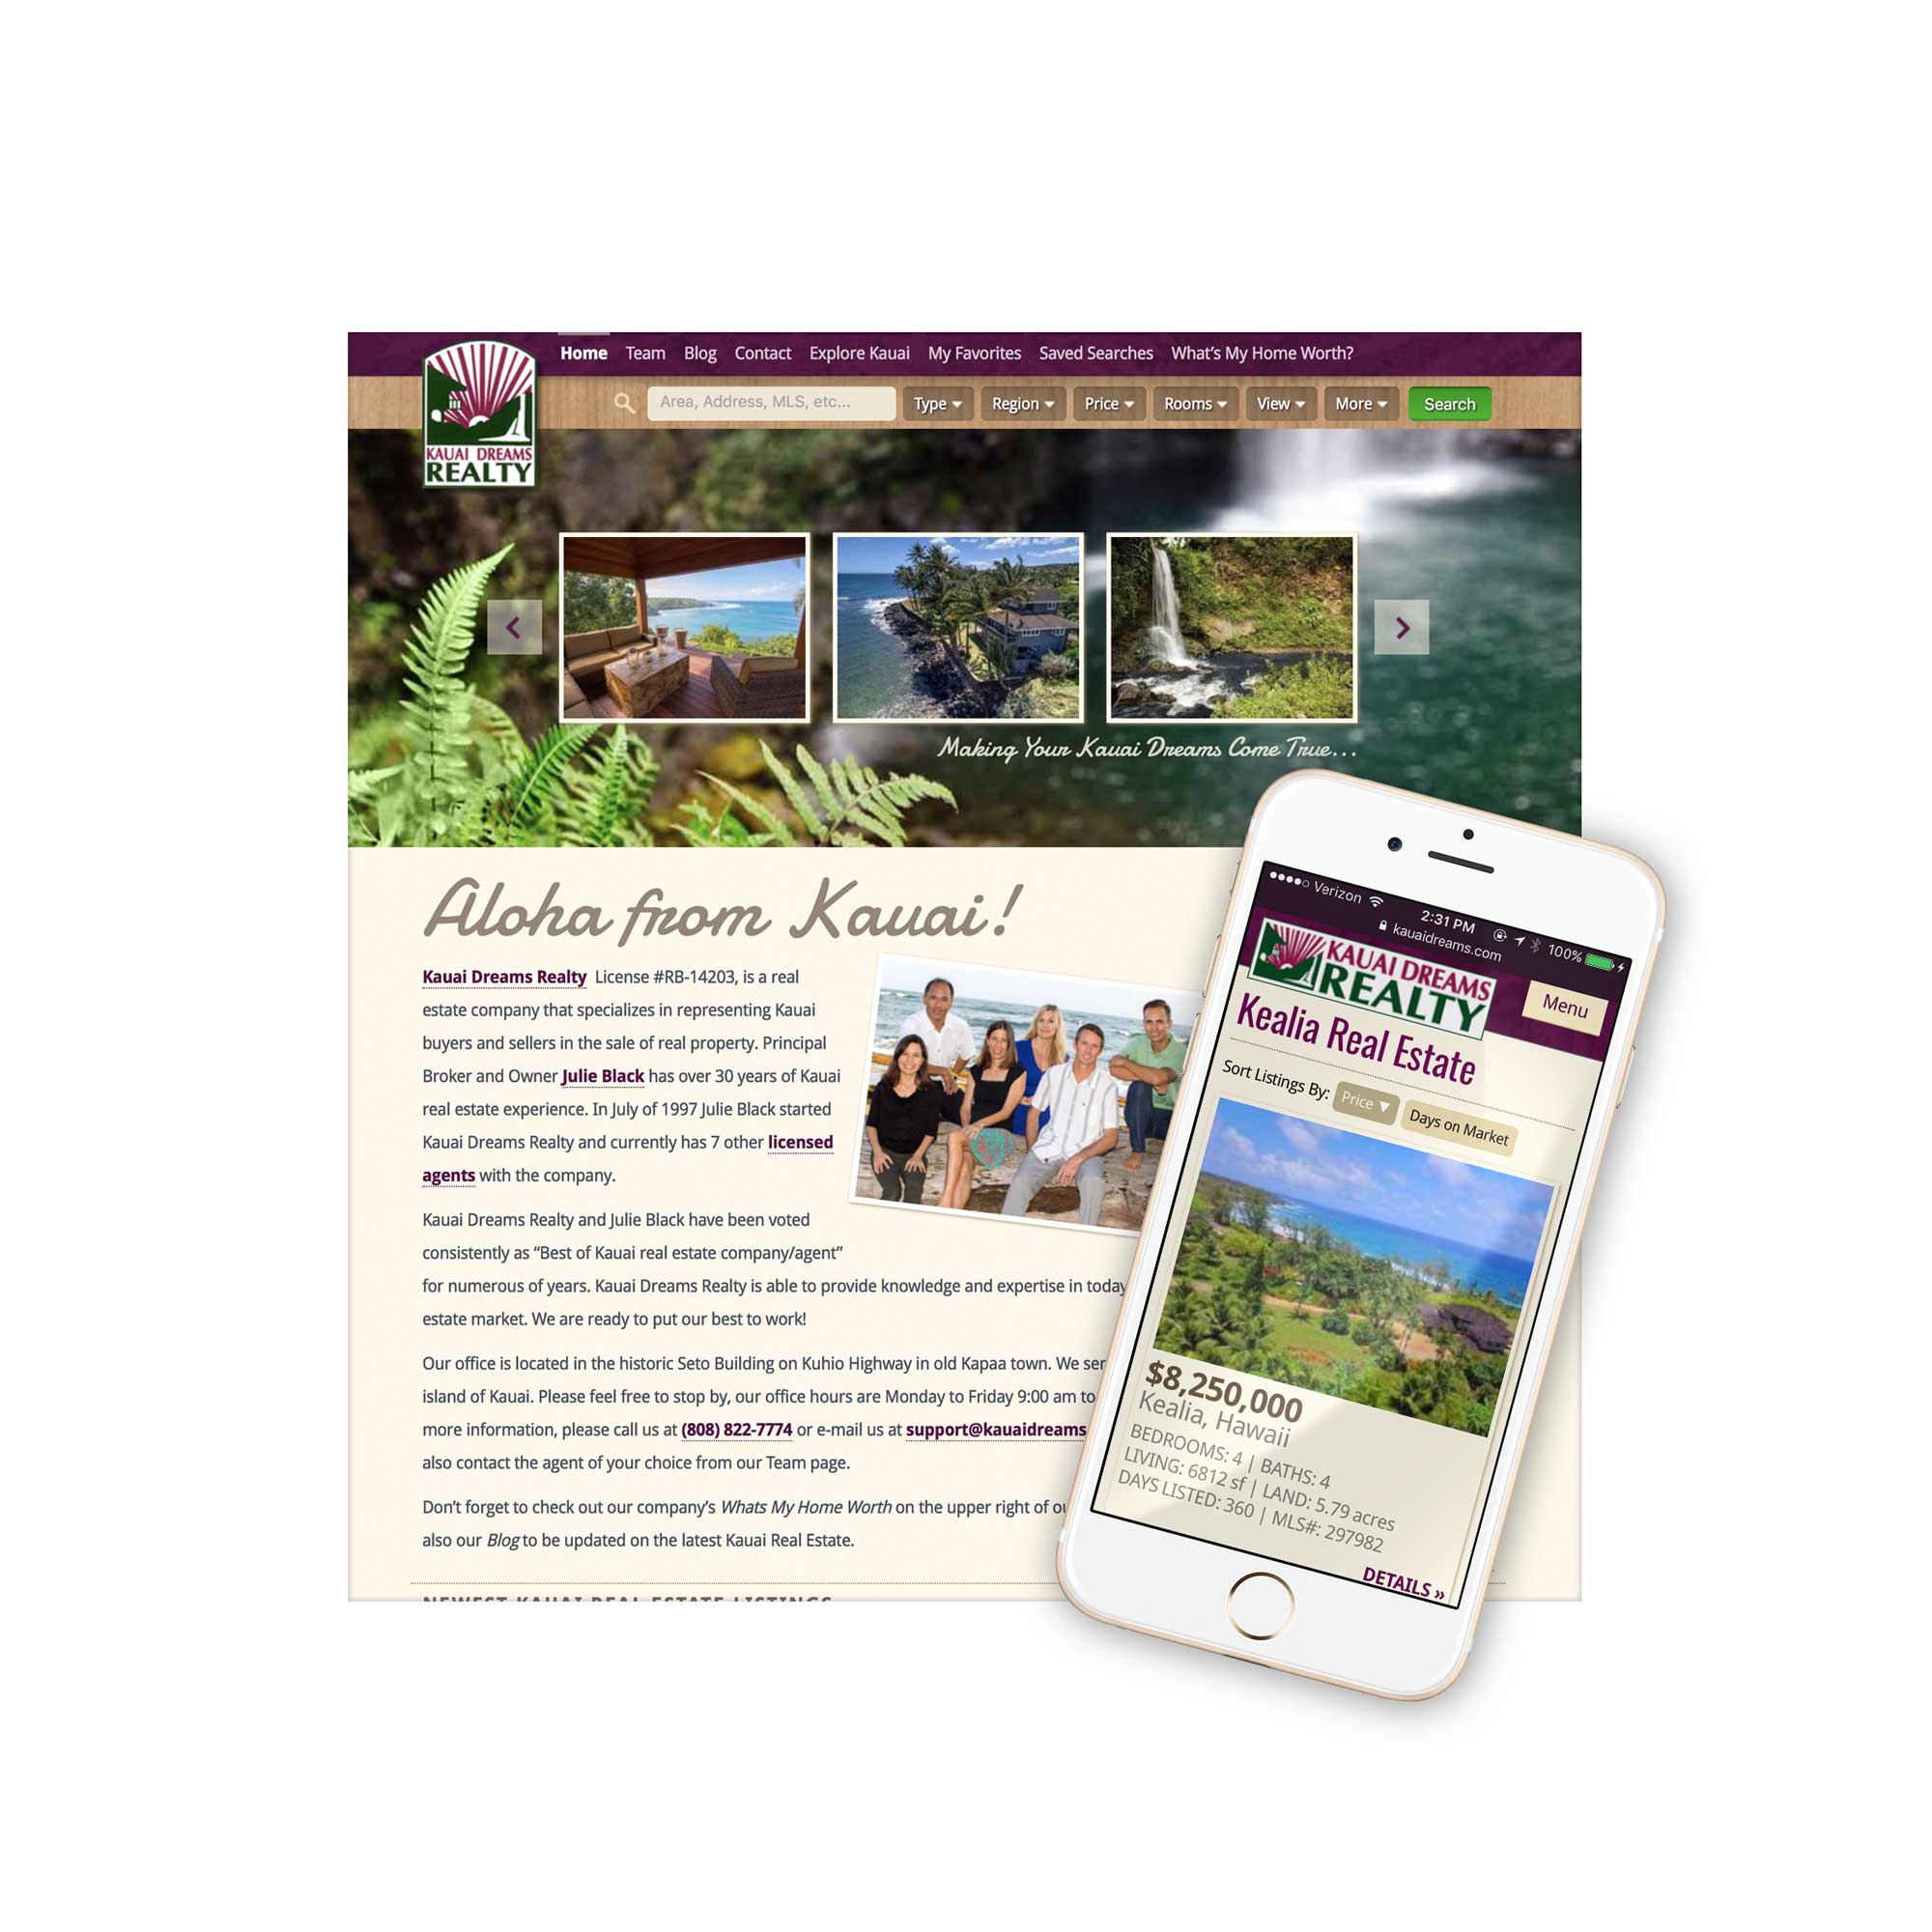 Kauai Dreams MLS Website Design